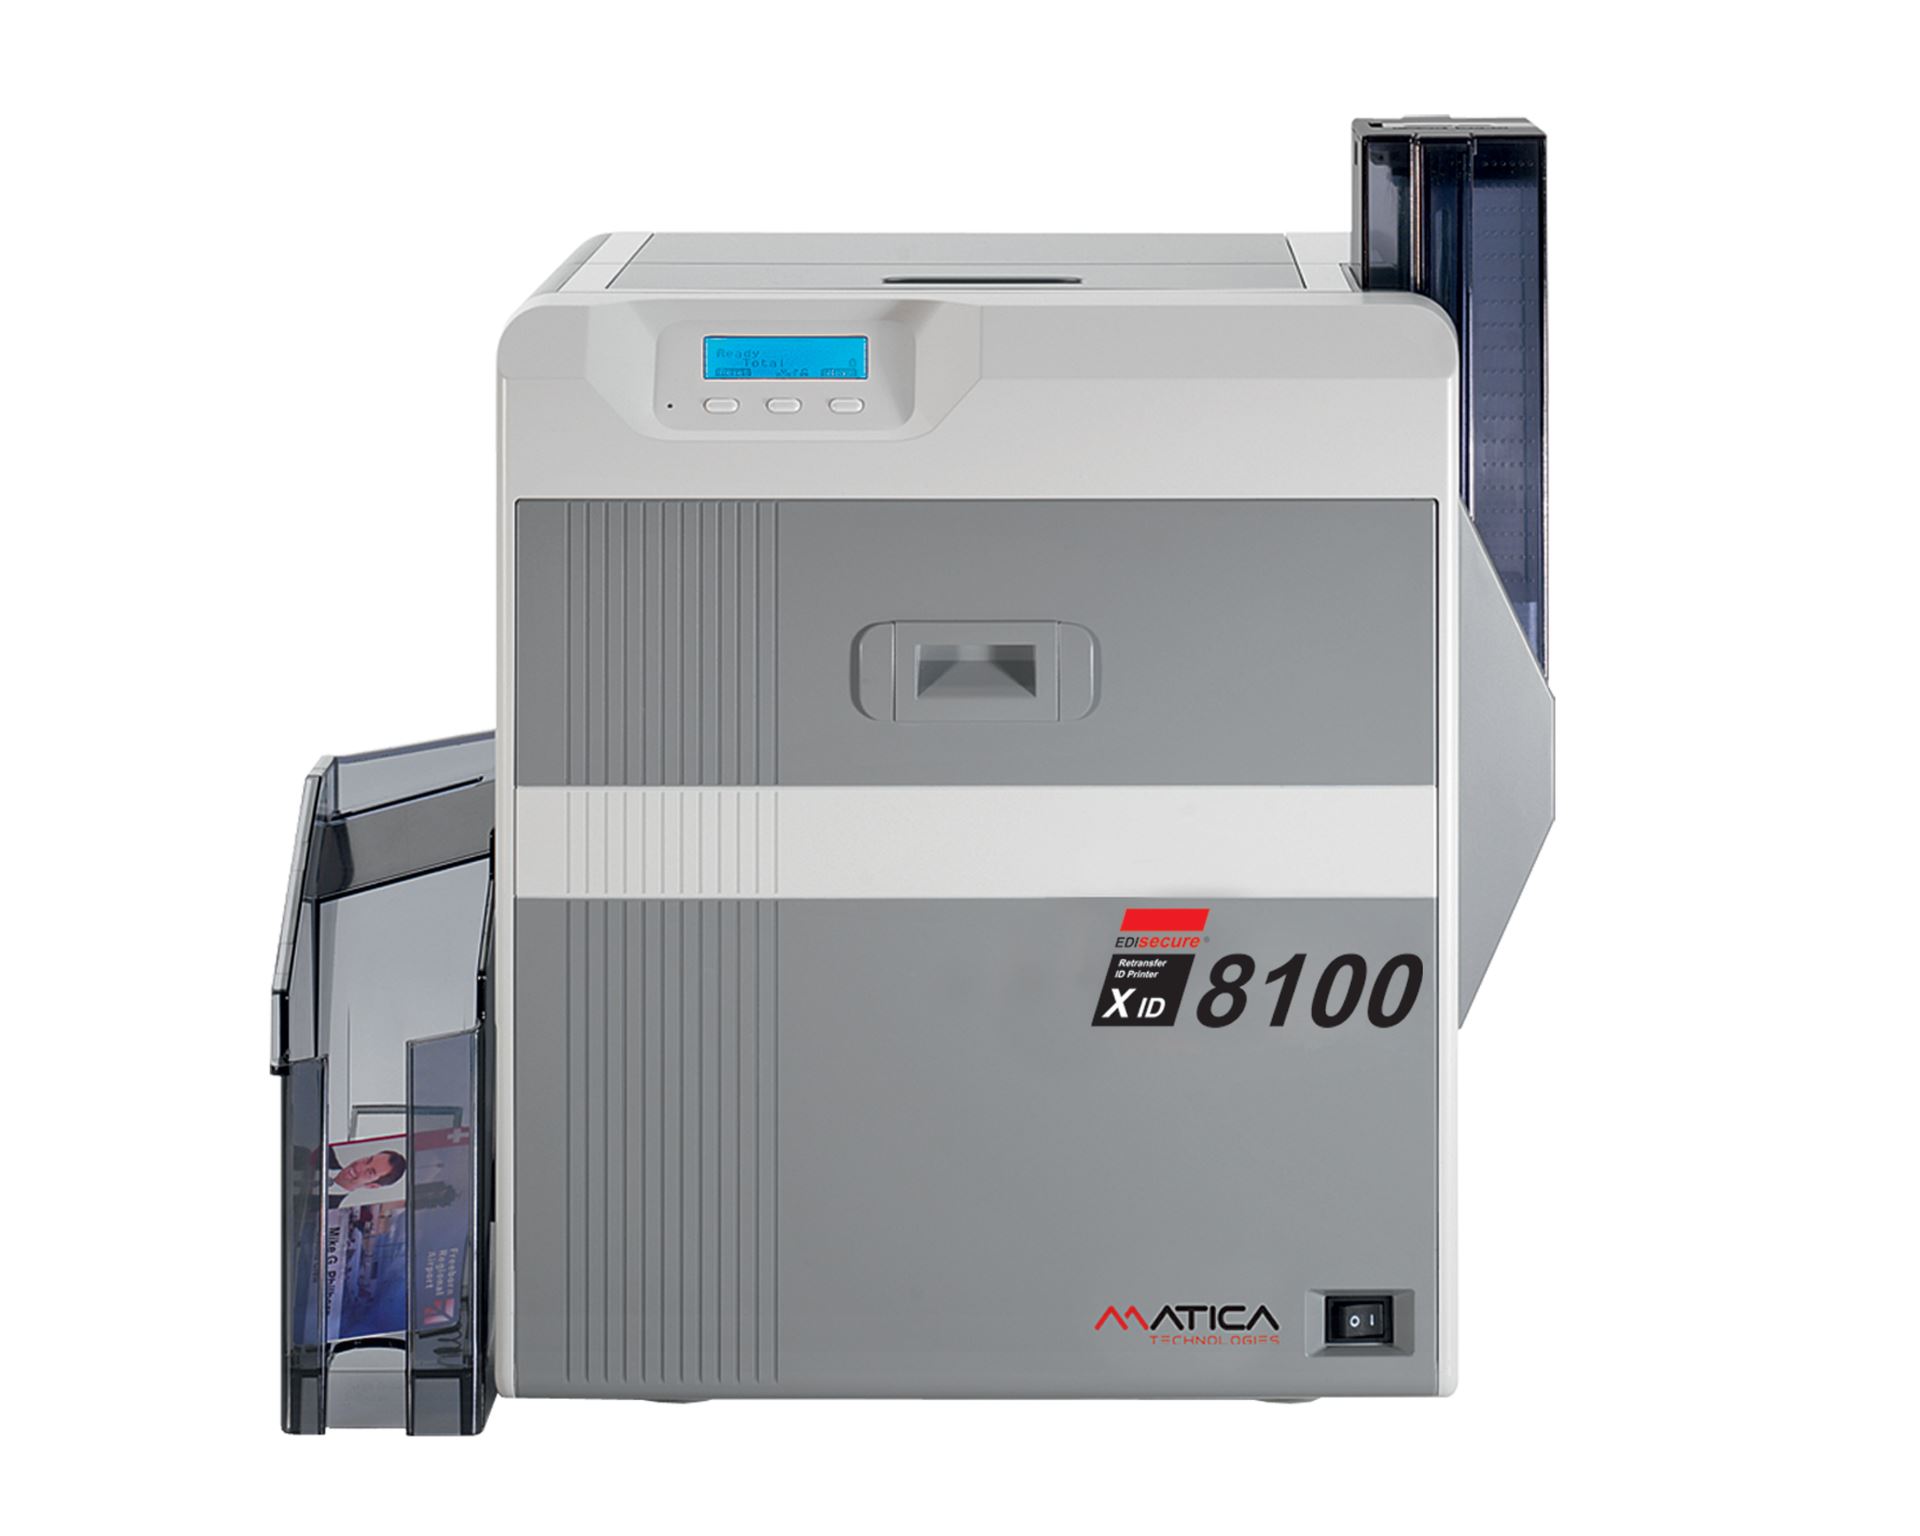 Matica XID8100 Retransfer Printer | Free UK Delivery